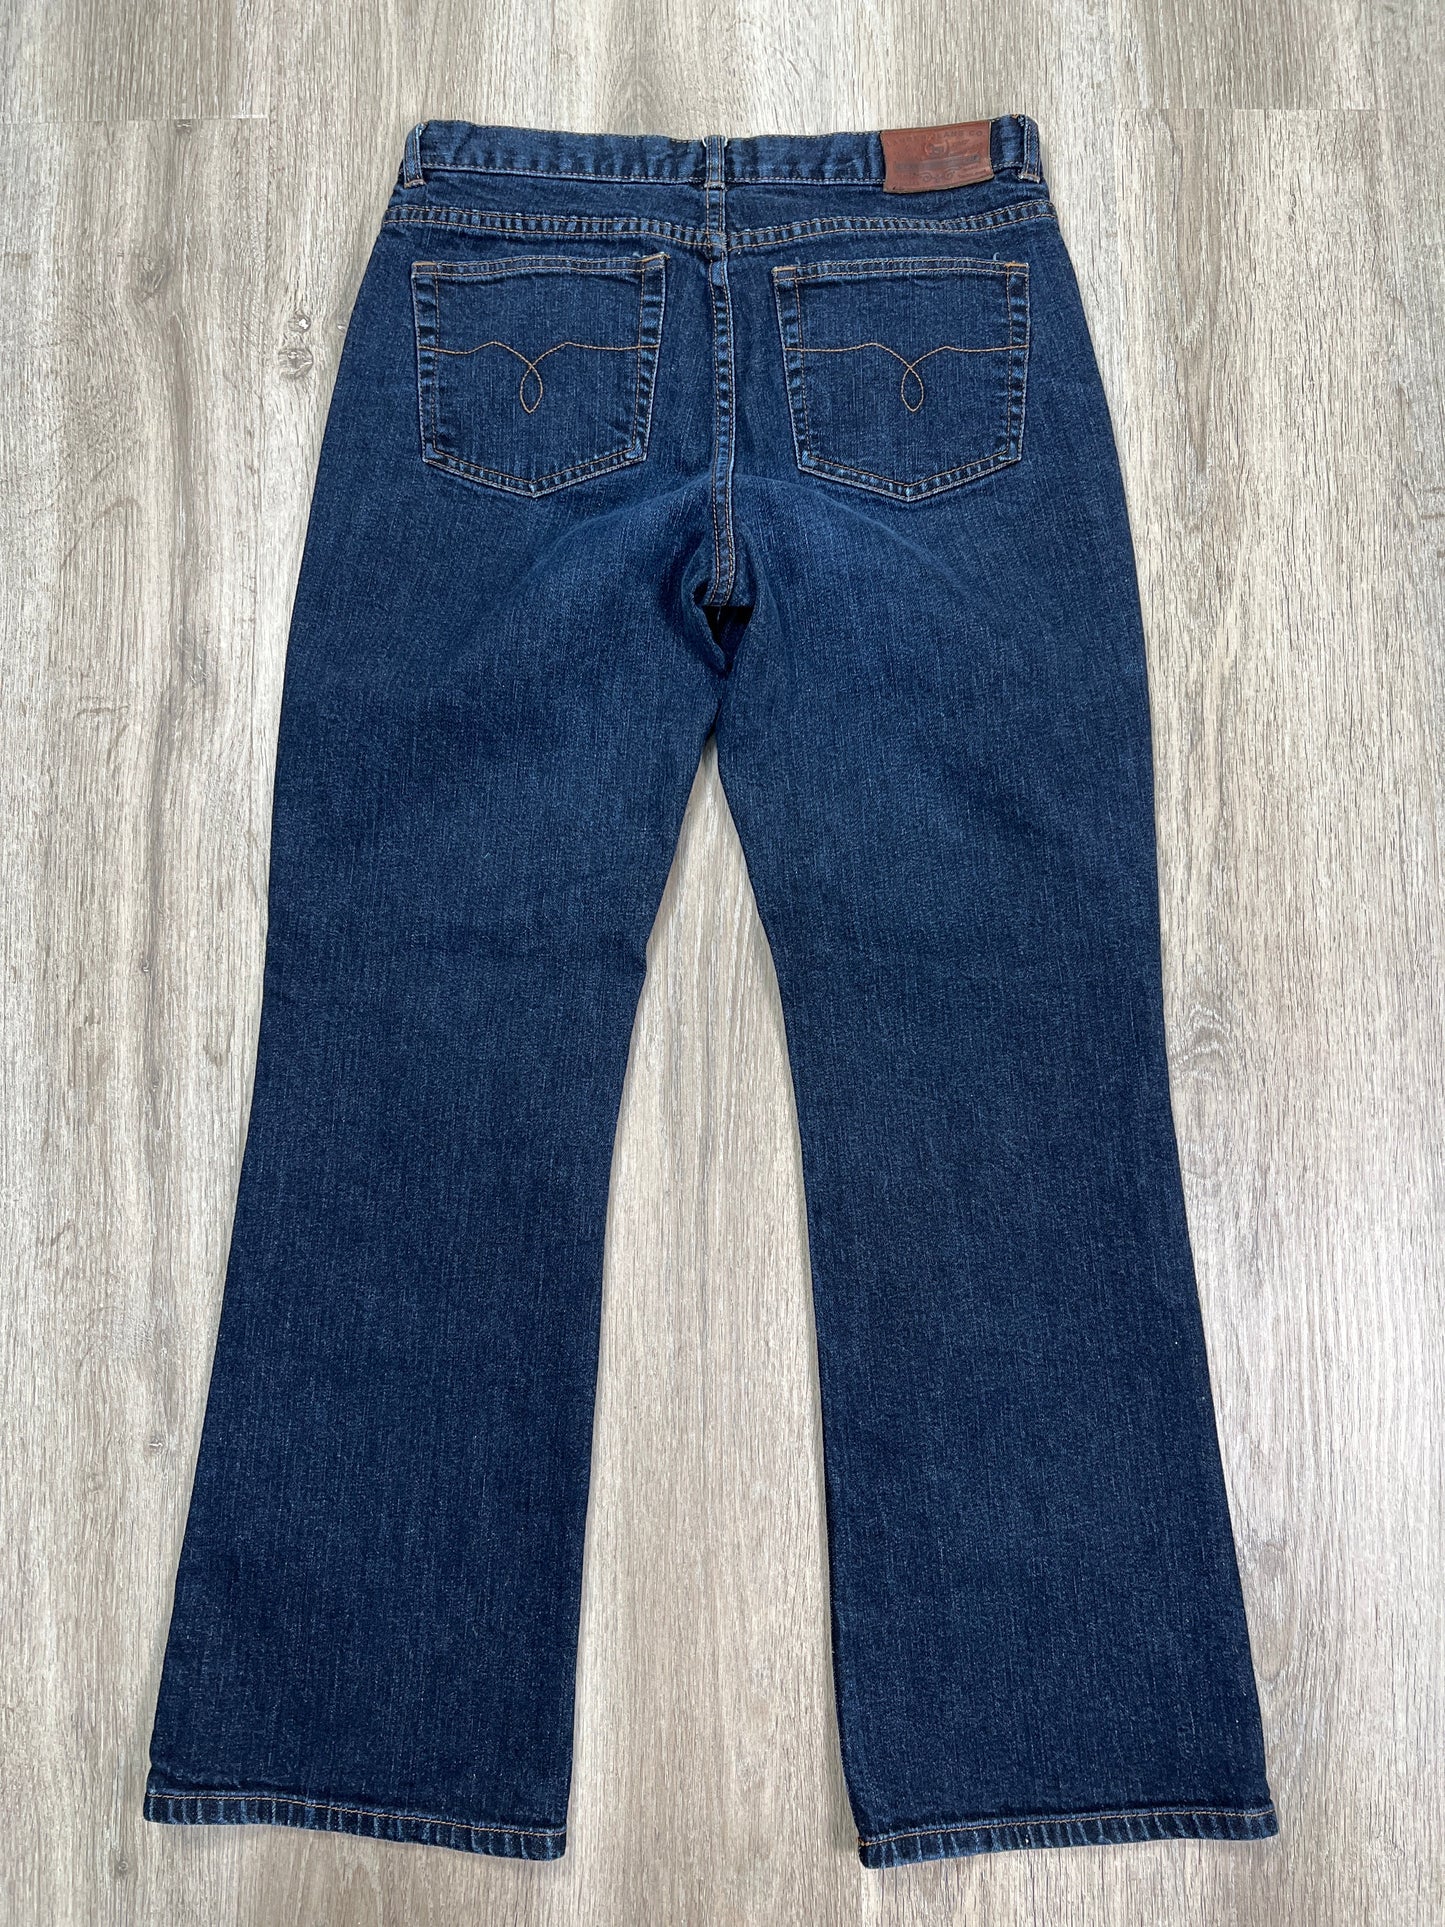 Jeans Boot Cut By Ralph Lauren  Size: 10